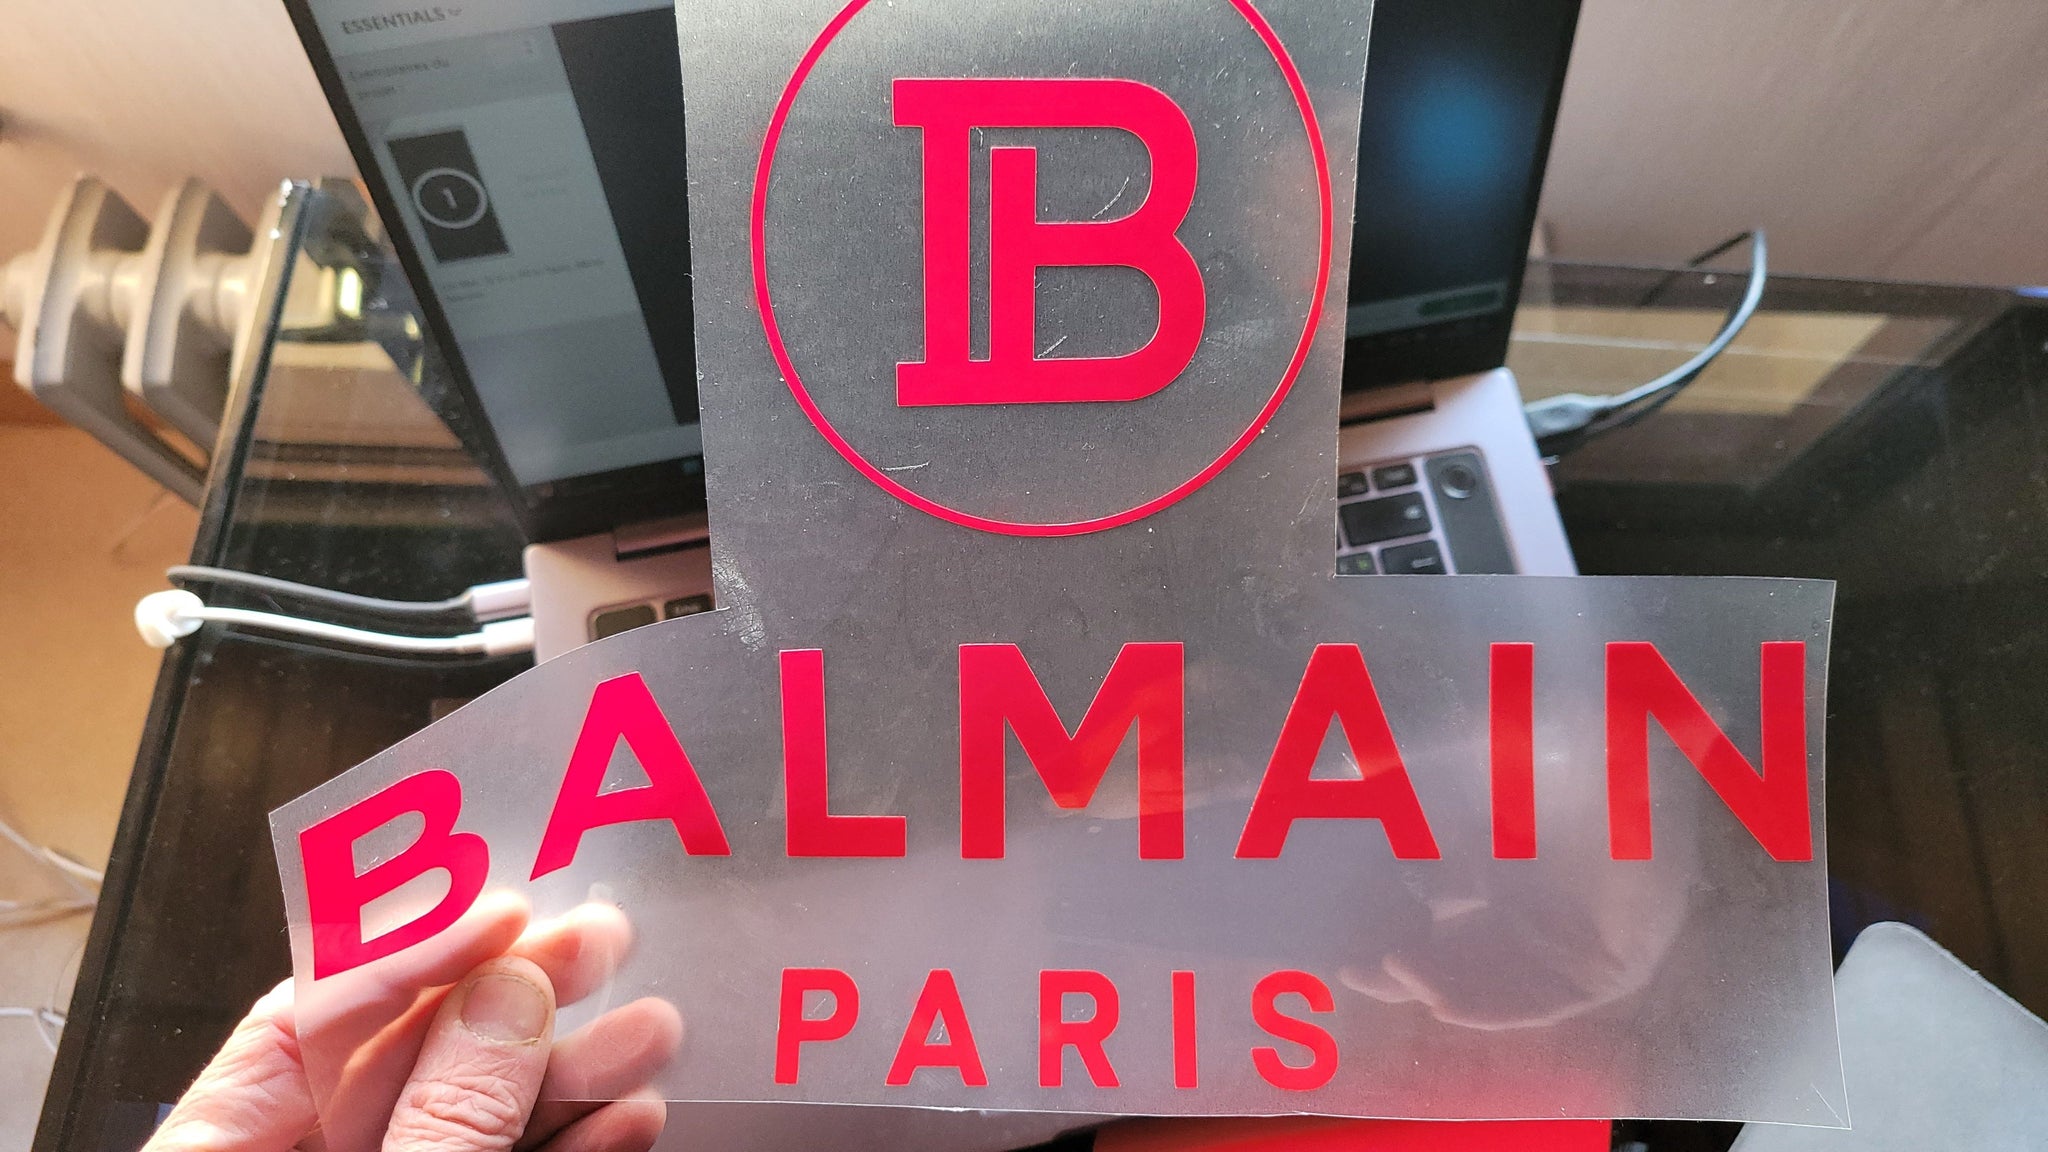 BALMAIN PARIS BALMAIN PARIS - Pierre Balmain S.A.S. Trademark Registration